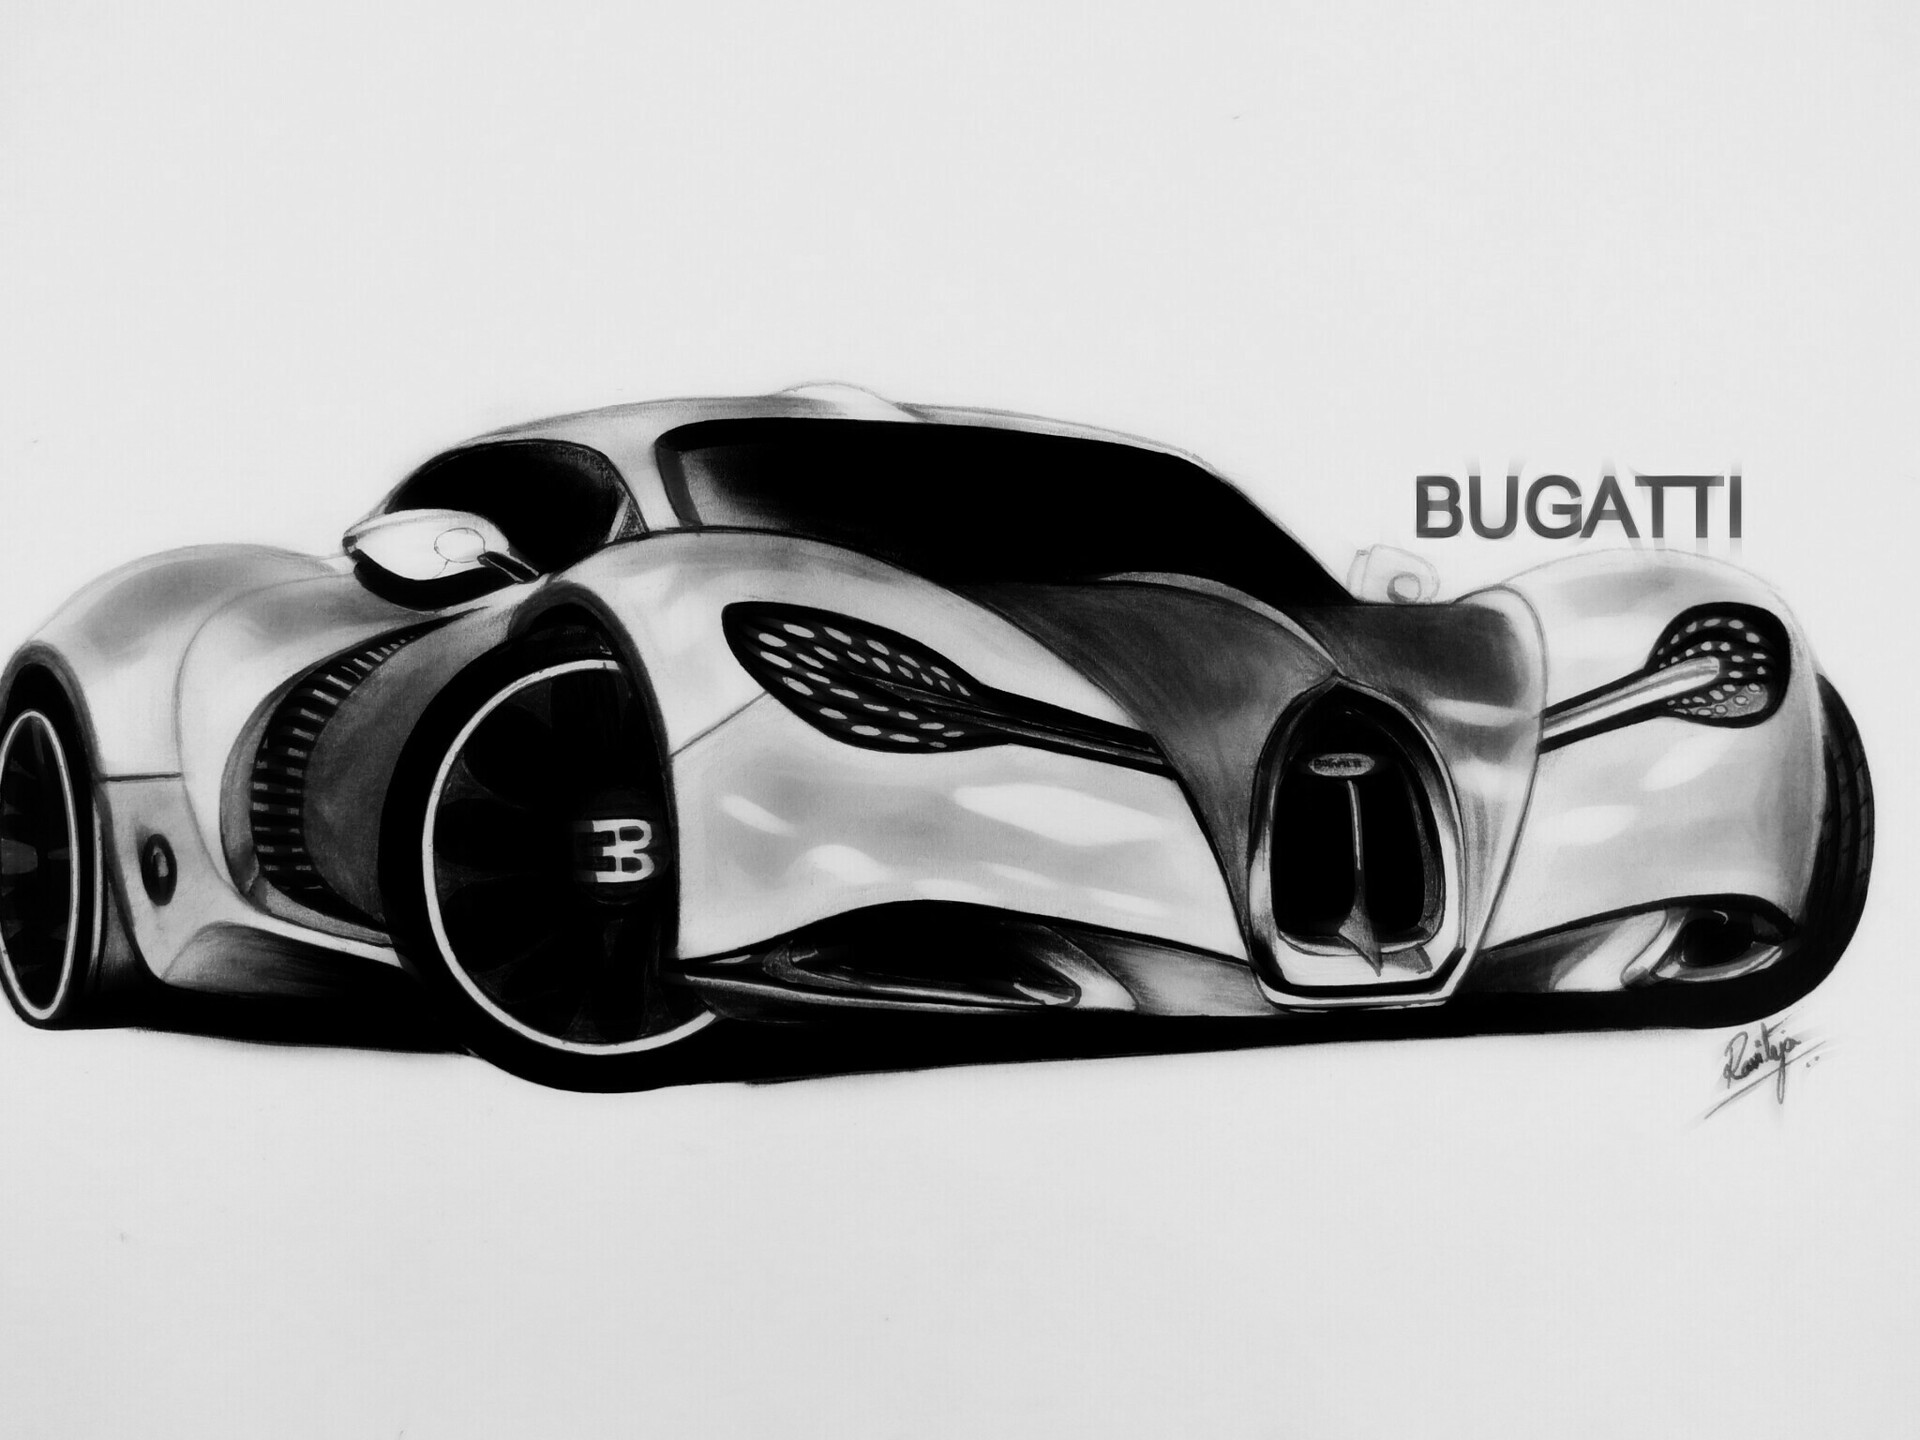 bugatti veyron drawing step by step